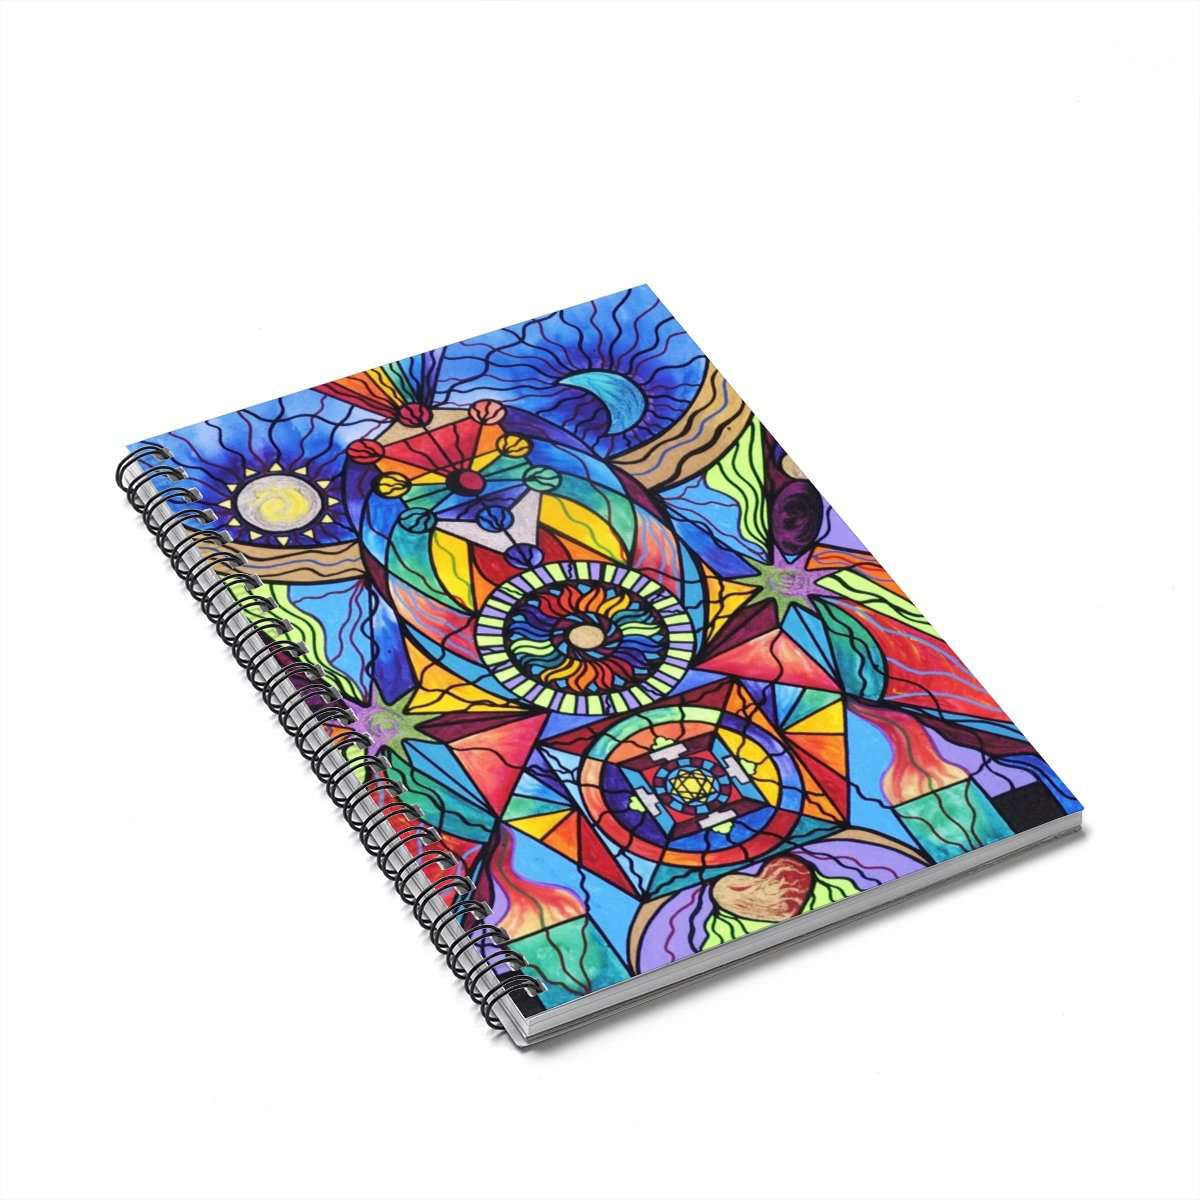 Spiritual Guide - Spiral Notebook